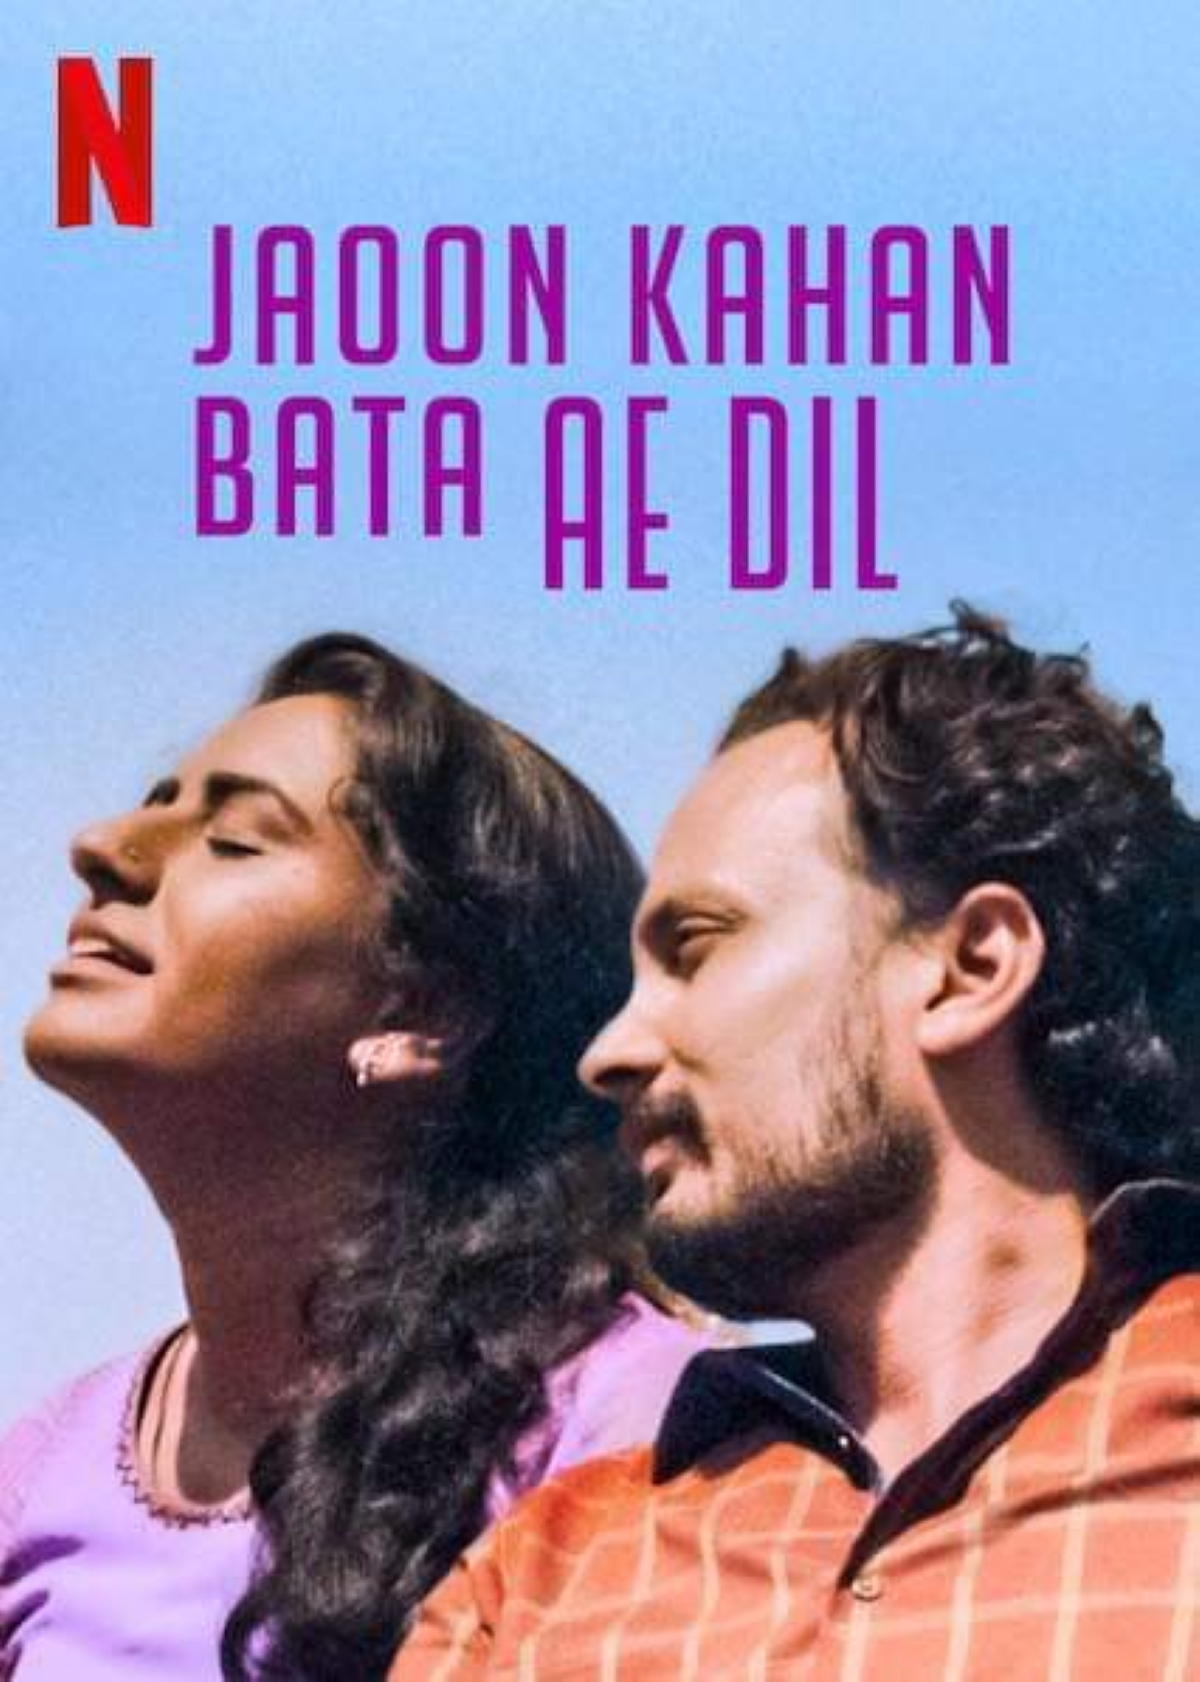 [Rattan Gujadhur] Aadish Kelushkar ‘Jaoon Kahan Bata De Dil’ - A Movie Review of an Artistic Feat 